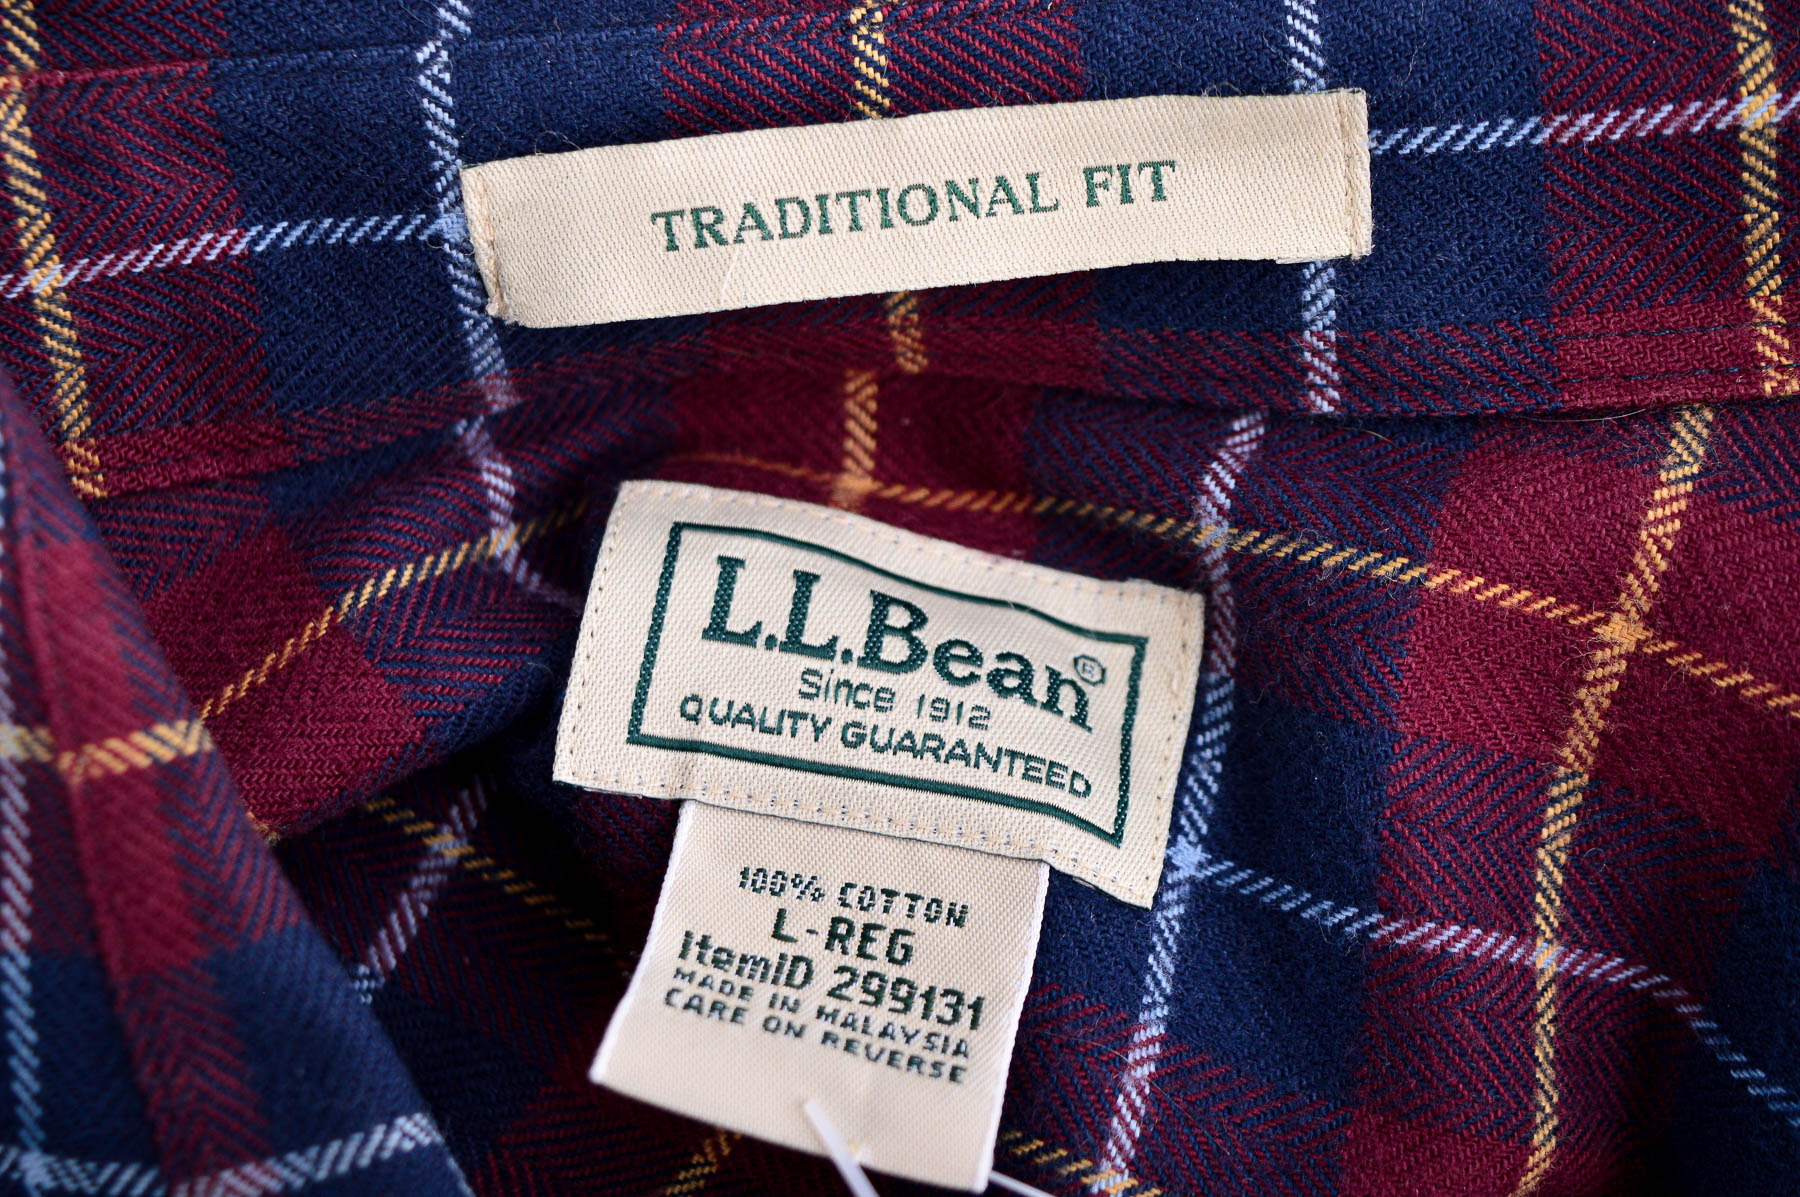 Męska koszula - L.L.Bean - 2